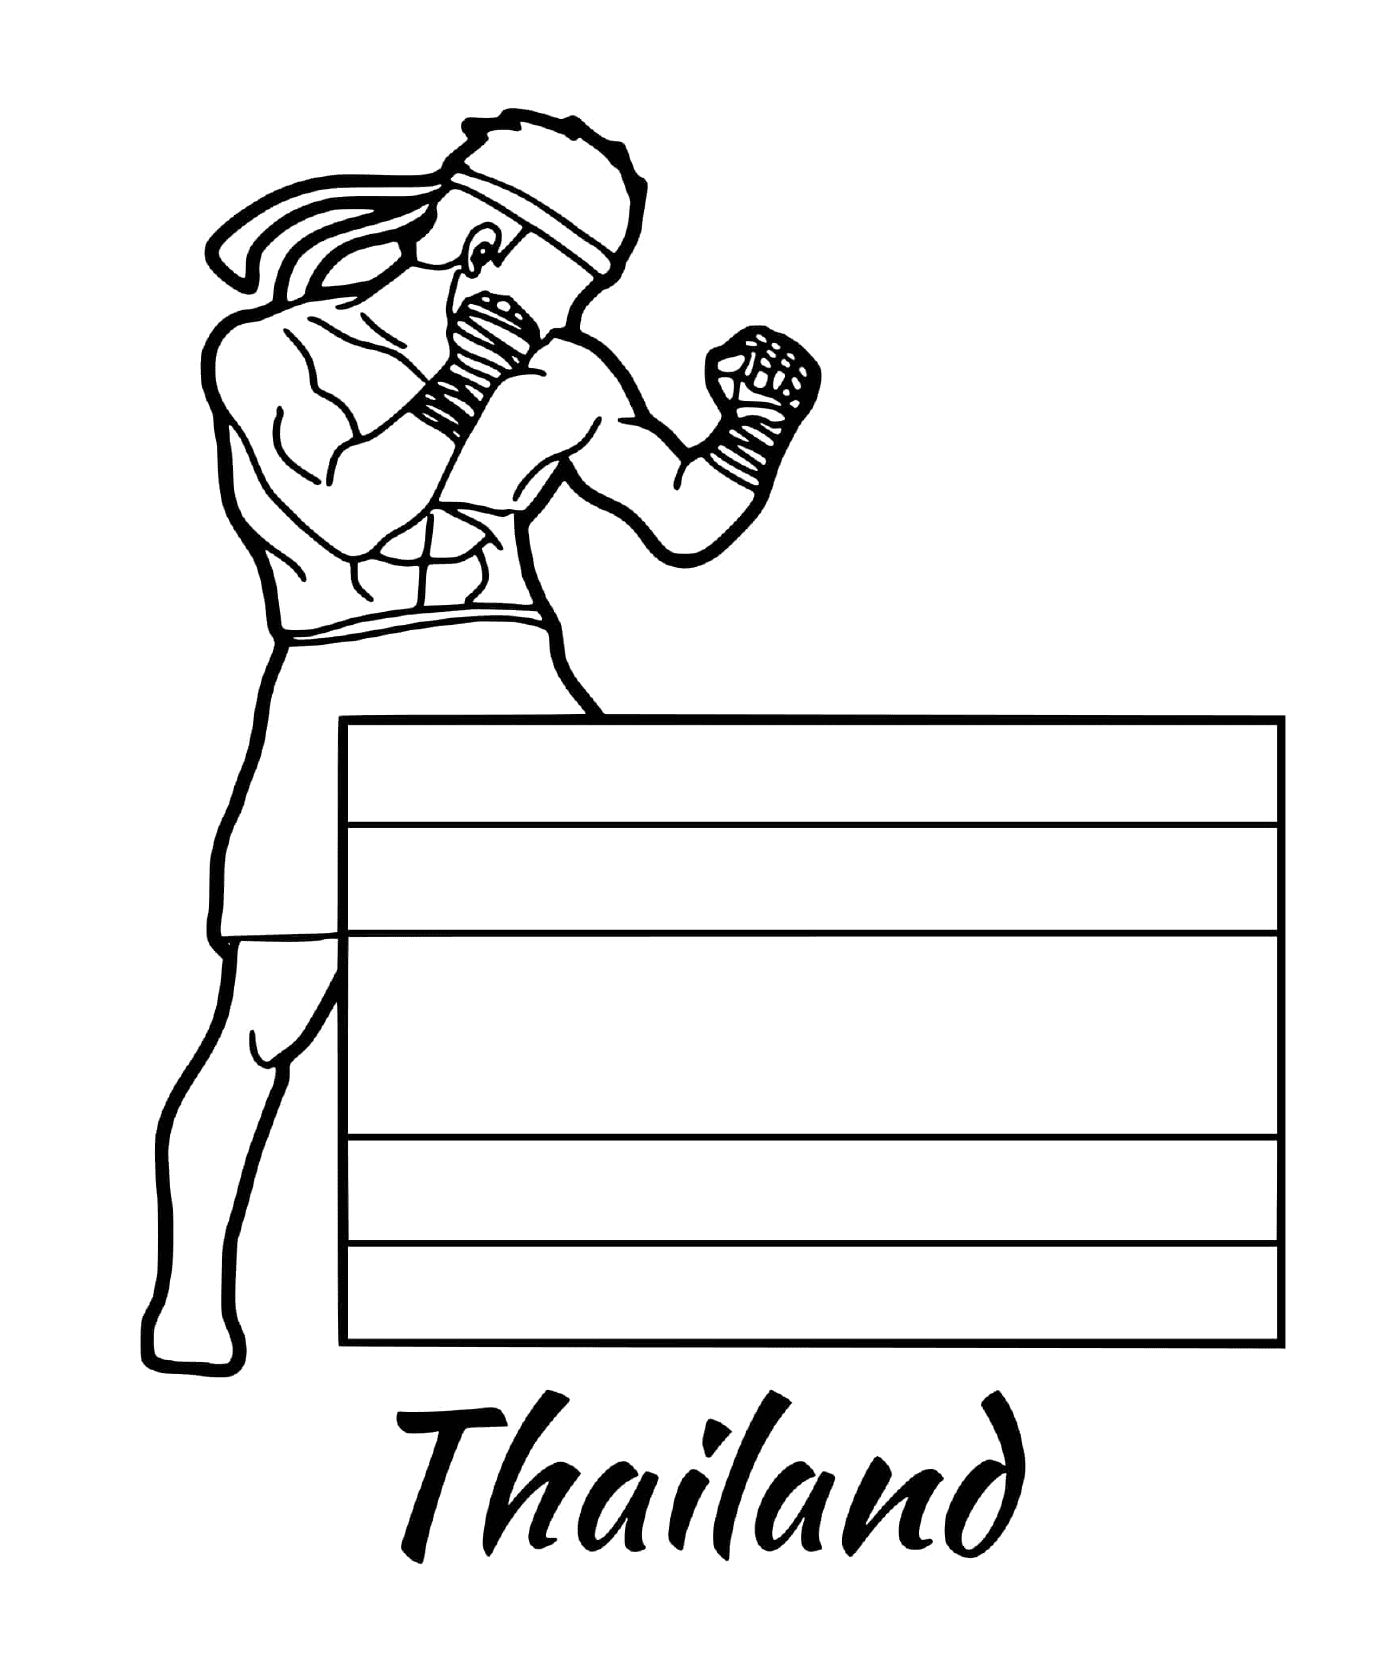  Bandeira da Tailândia, Muay Thai 